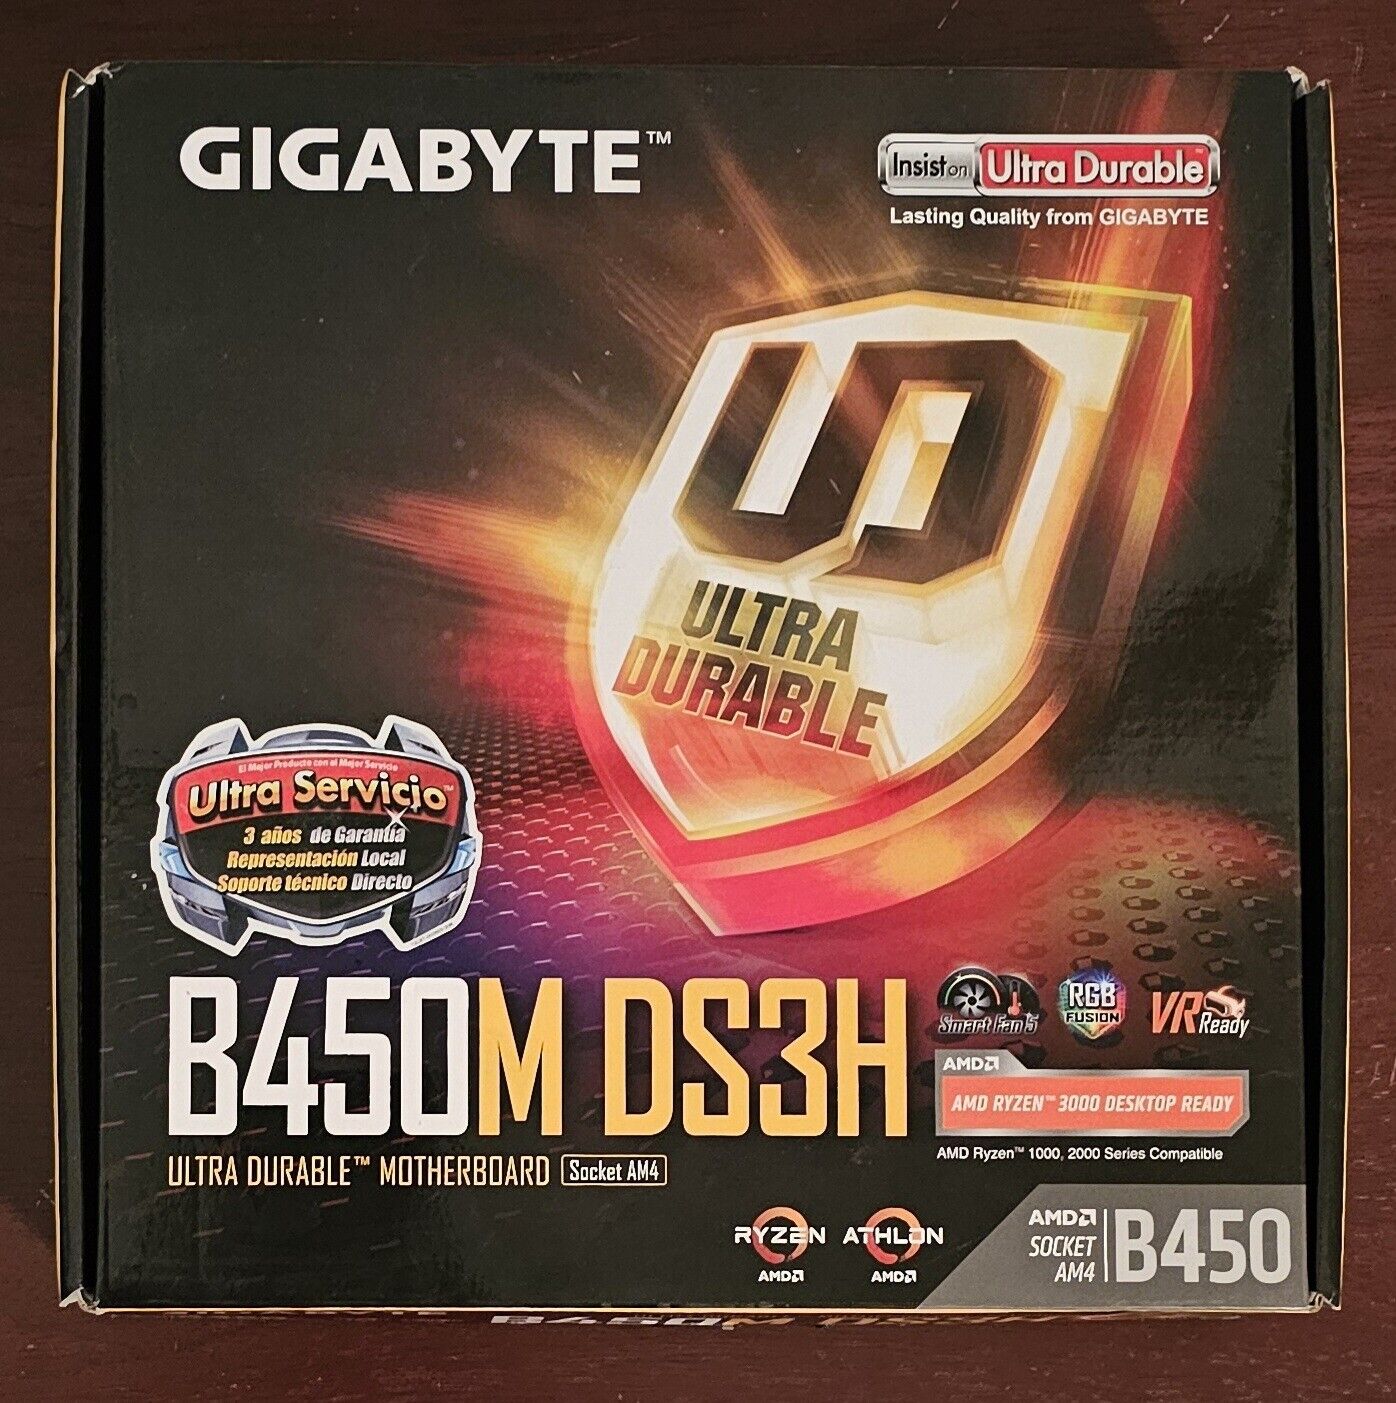 **LATEST BIOS** GIGABYTE B450M DS3H AM4 AMD Ryzen MicroATX Gaming Motherboard